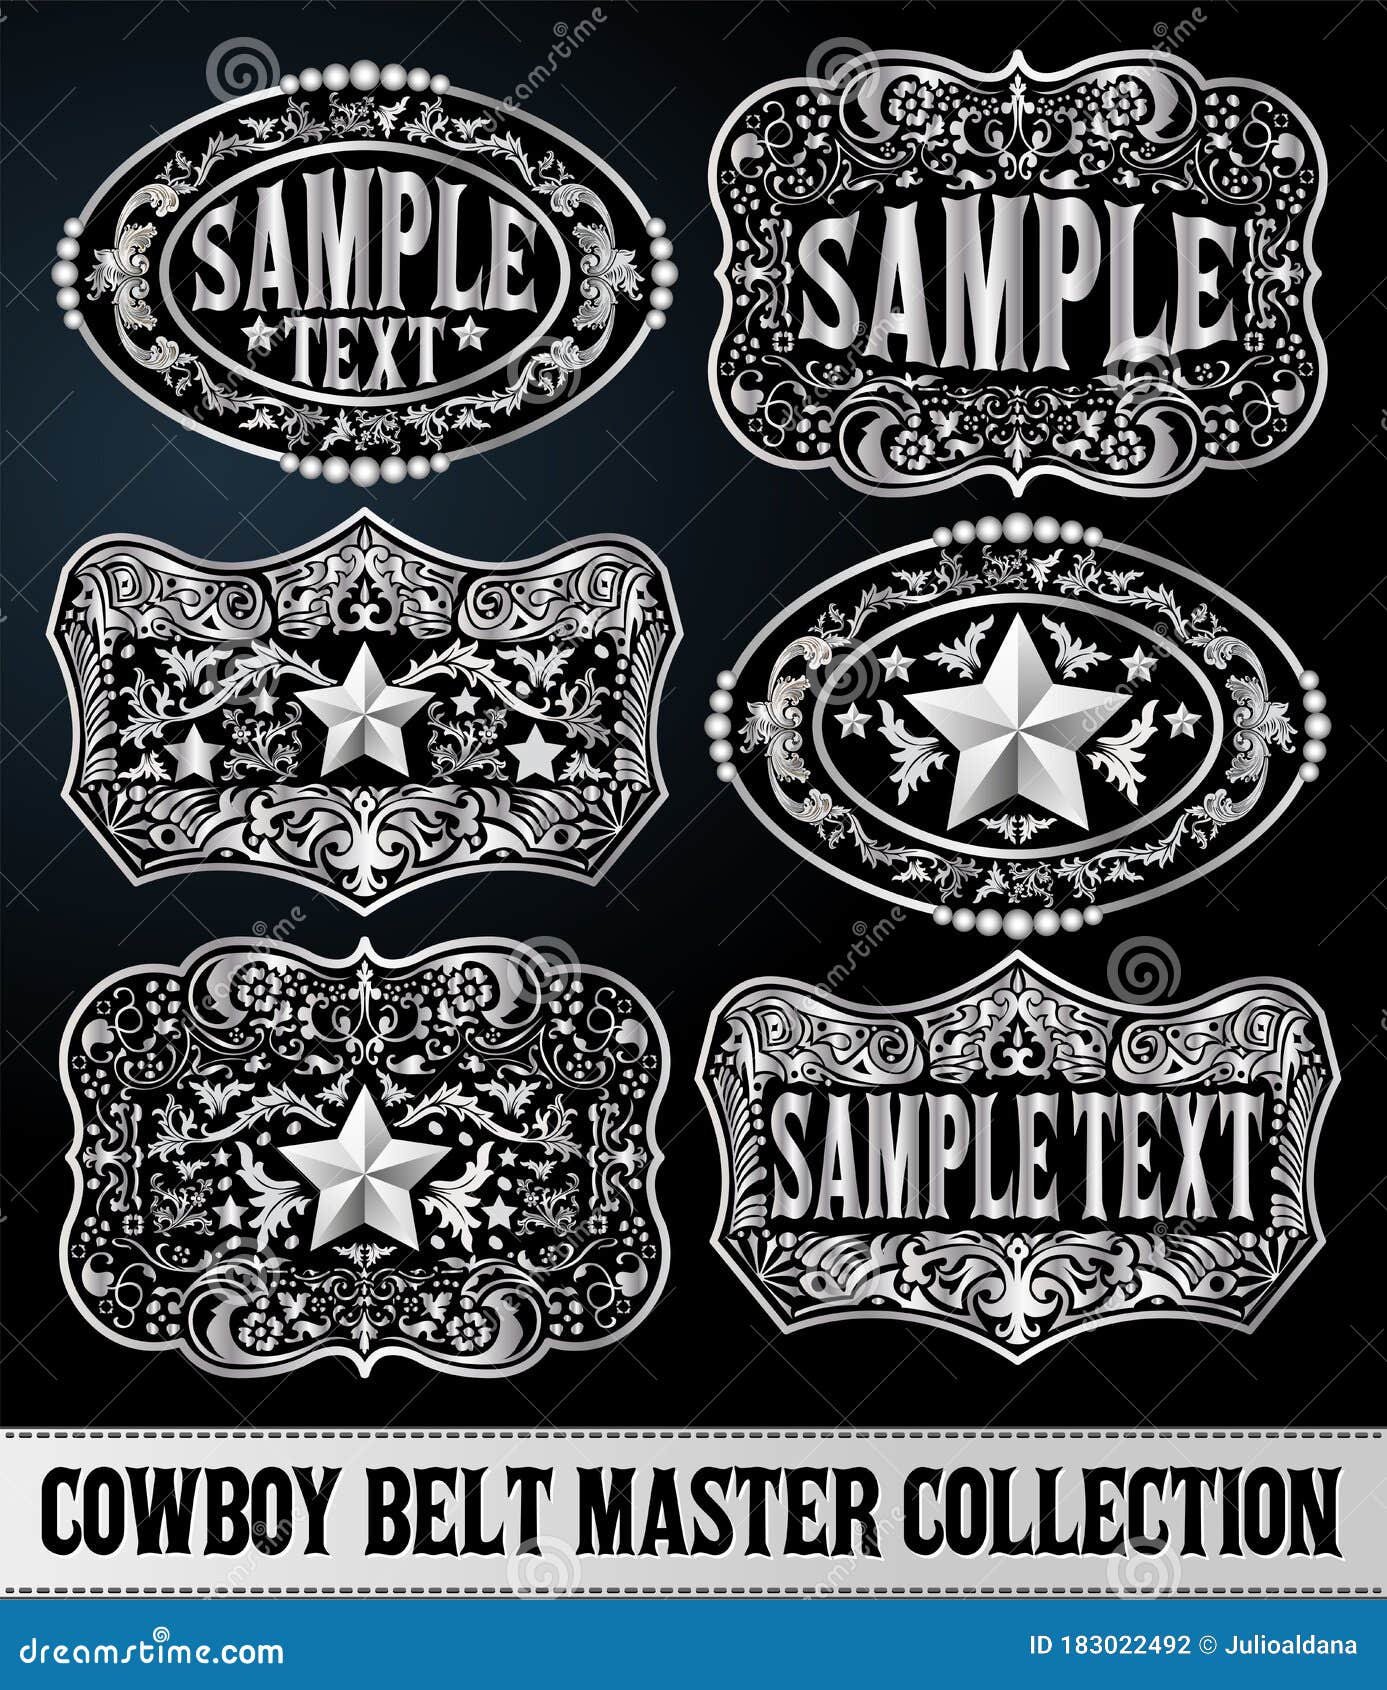 western style cowboy belt buckle label master collection set.